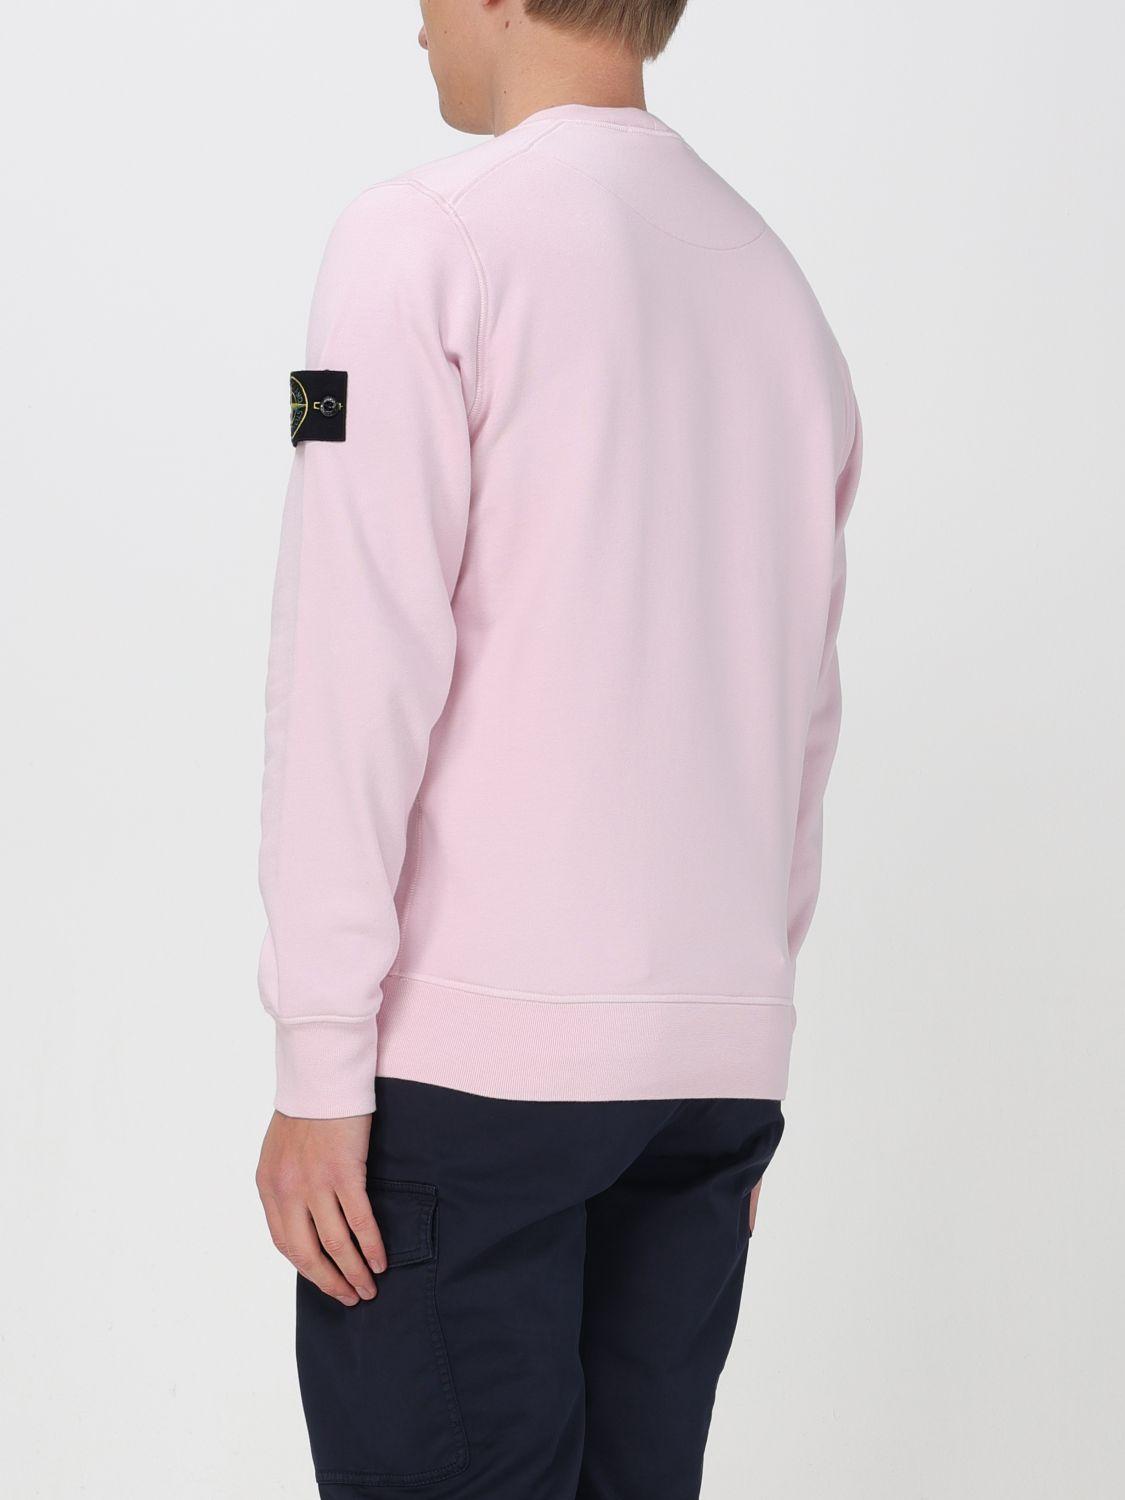 Stone Island Sweatshirt in Pink for Men | Lyst